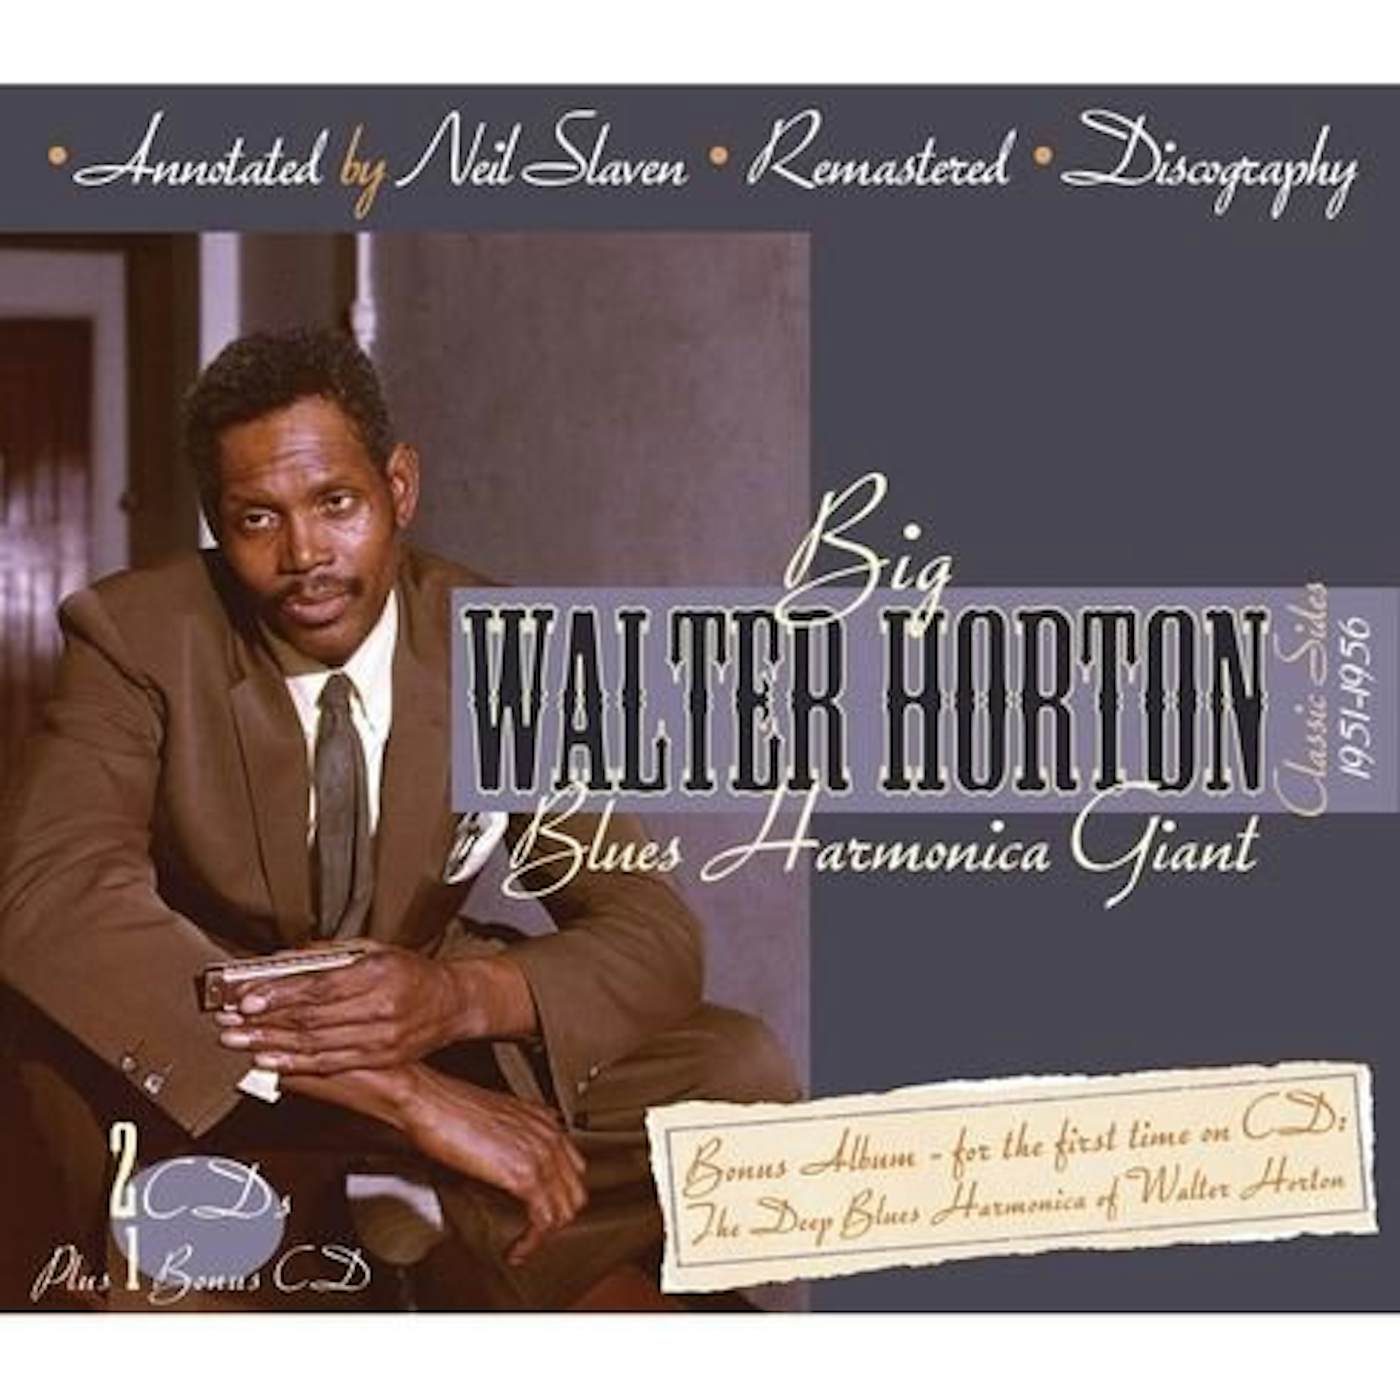 Walter Horton BLUES HARMONICA GIANT CD